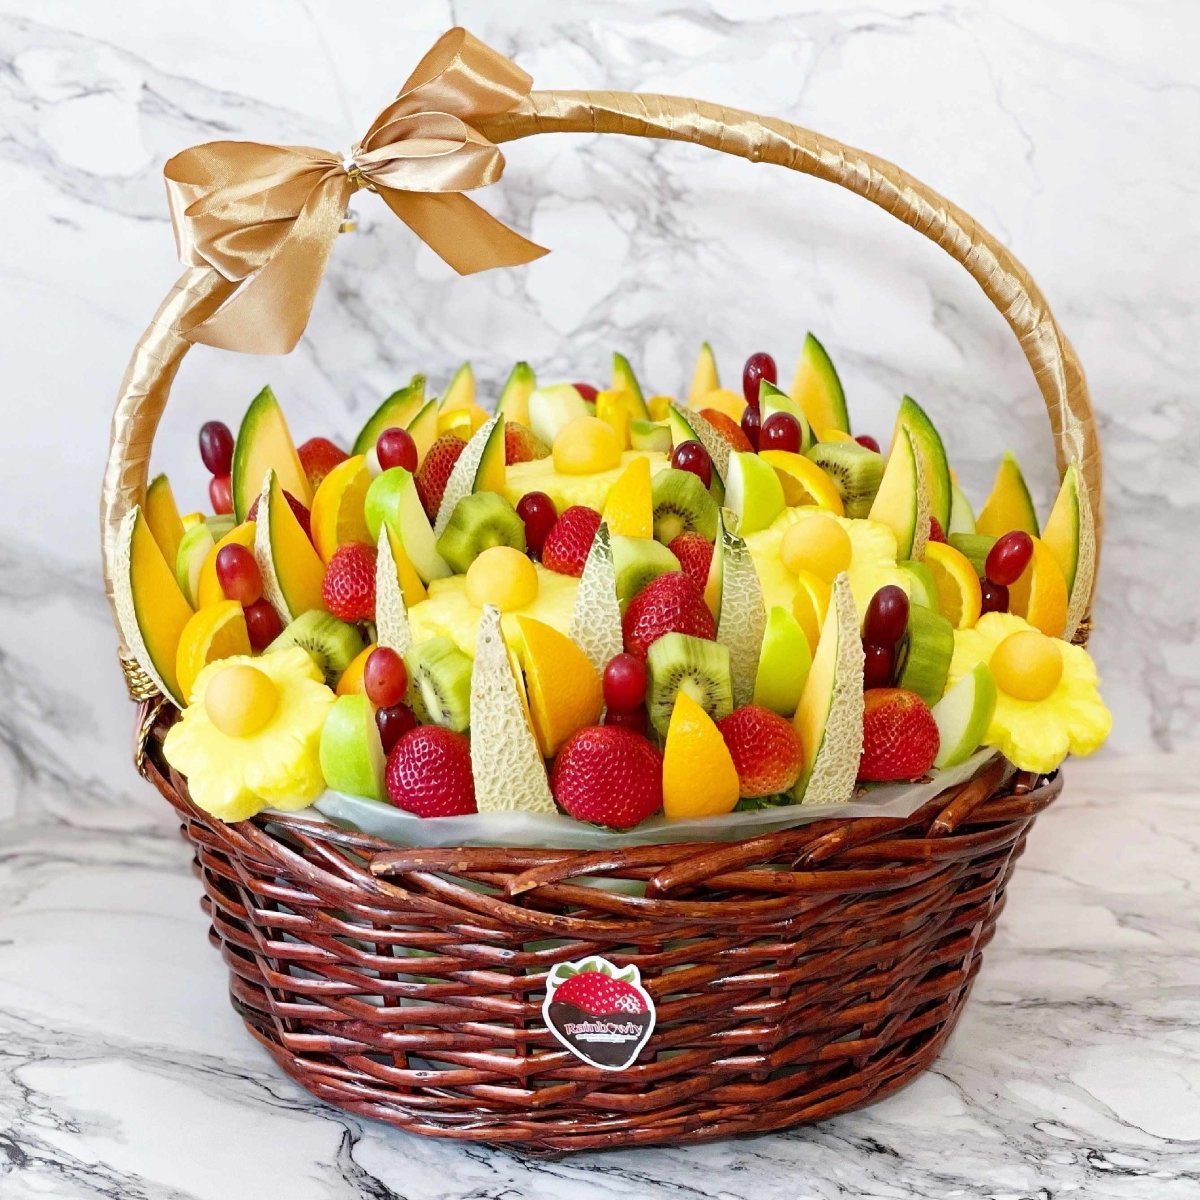 Fruit Basket Singapore -Sunny Garden Fresh Fruit Arrangements( 3 days advance preorder) - Rainbowly Fresh Fruit Gift and Flower Arrangments